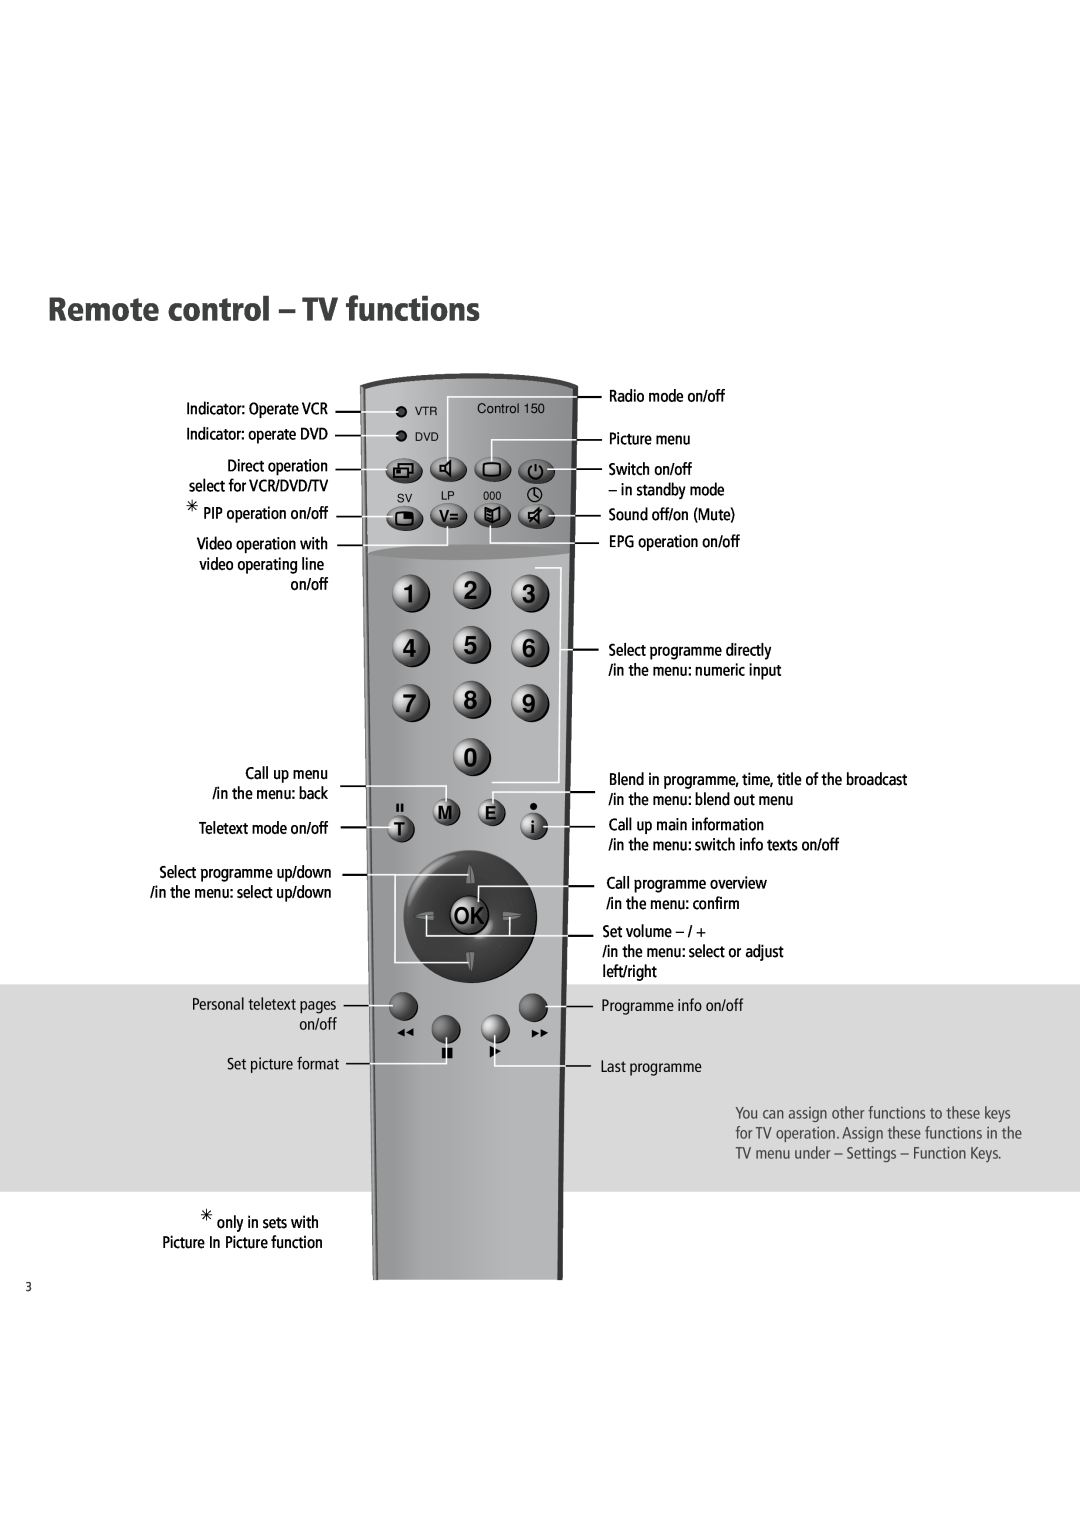 Loewe 3781 ZW, 3981 ZW, 32, 6381 ZW, 5381 ZW Remote control - TV functions, 1 2 4 5 7 8, Radio mode on/off, Control 